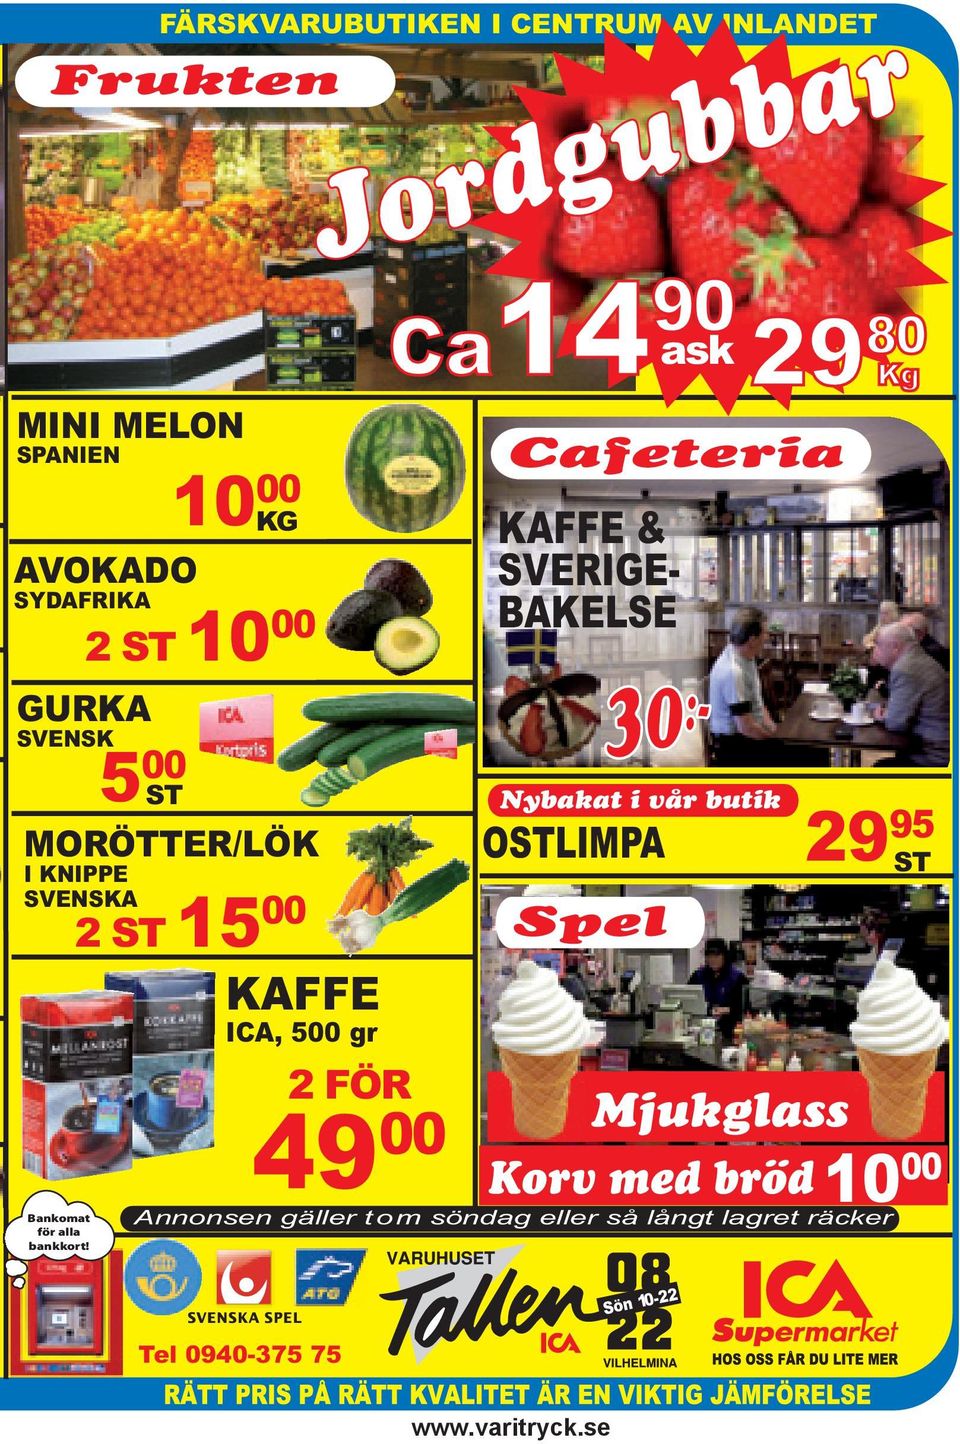 KNIPPE SVENSKA 2 ST 15 00 KAFFE ICA, 500 gr Jordgubbar 2 FÖR 49 00 Ca14 90 ask Cafeteria KAFFE & SVERIGE- BAKELSE